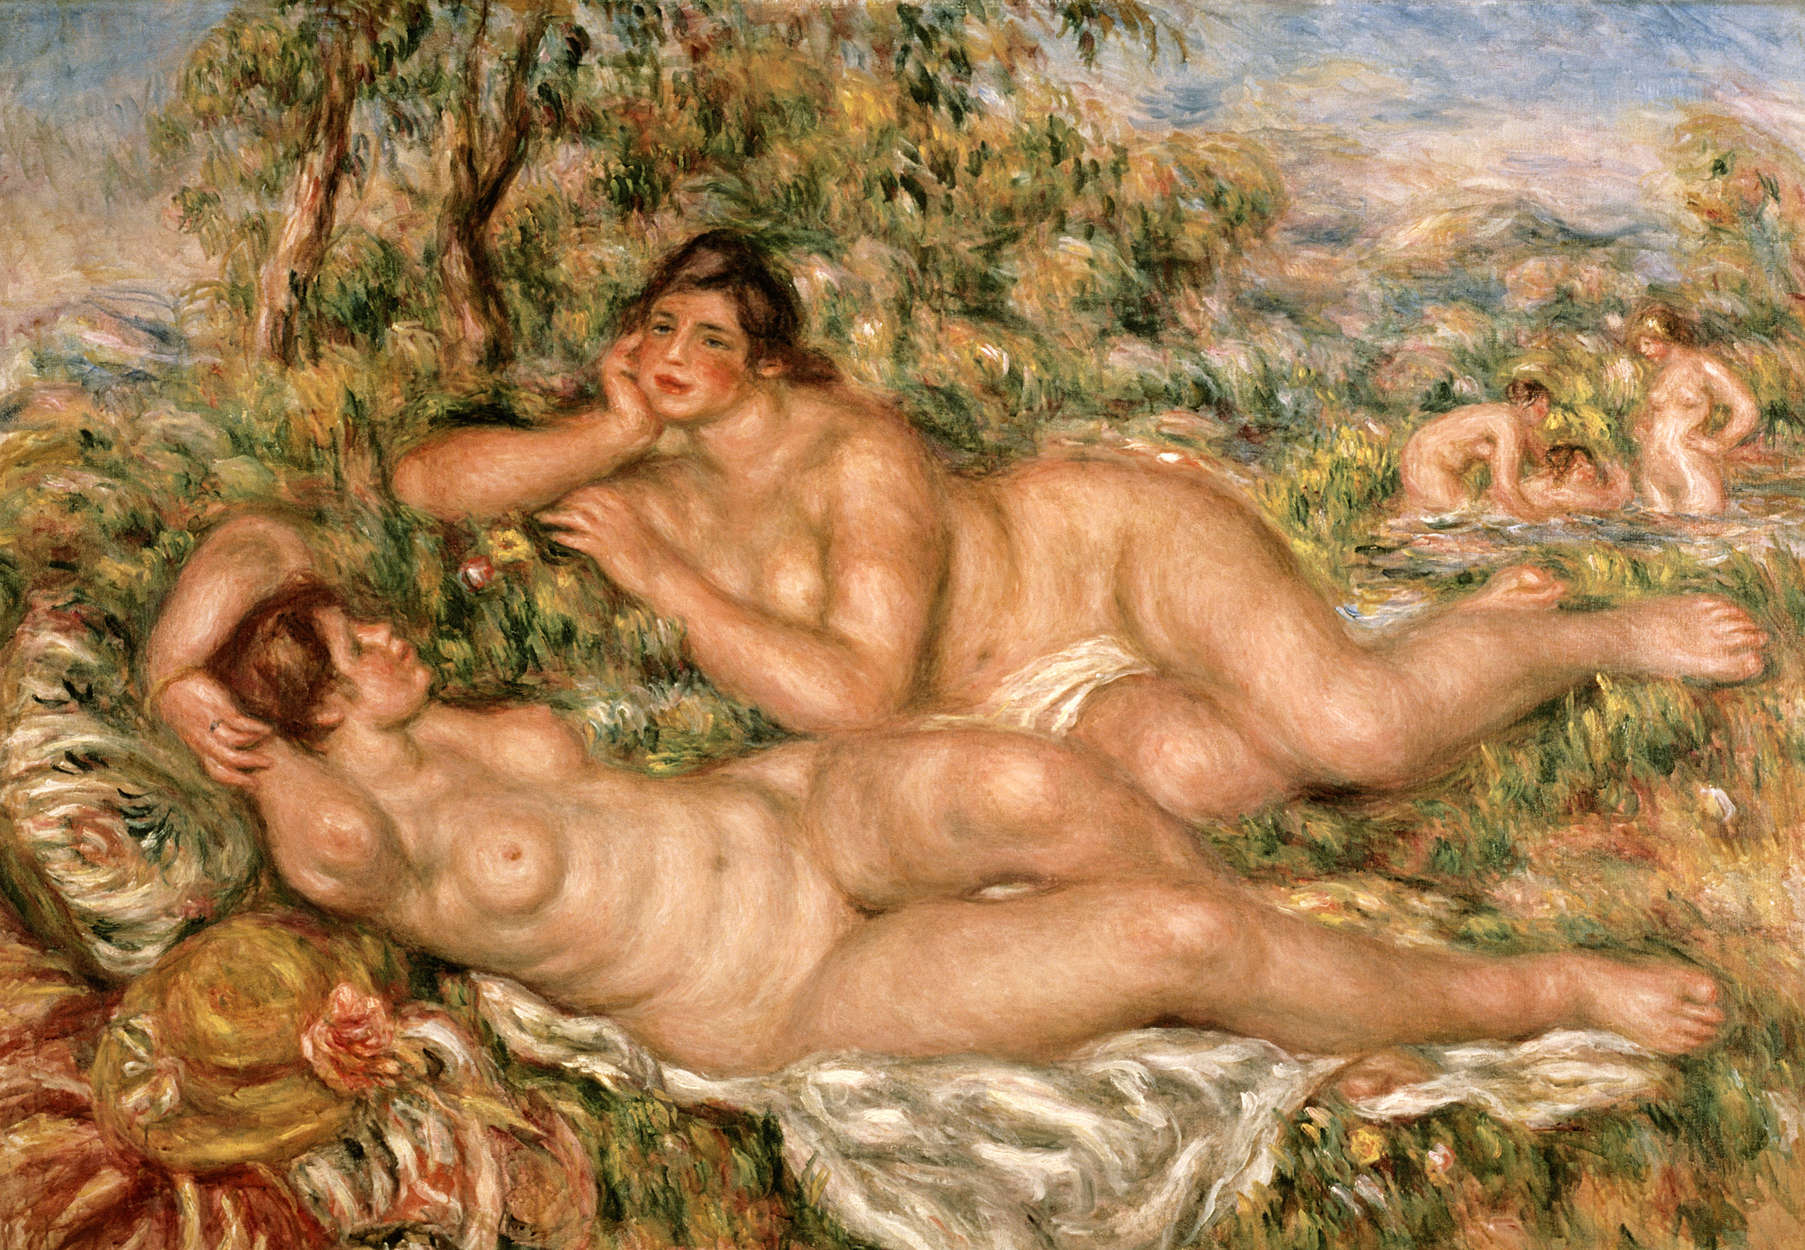             Photo wallpaper "Bathers" by Pierre Auguste Renoir
        